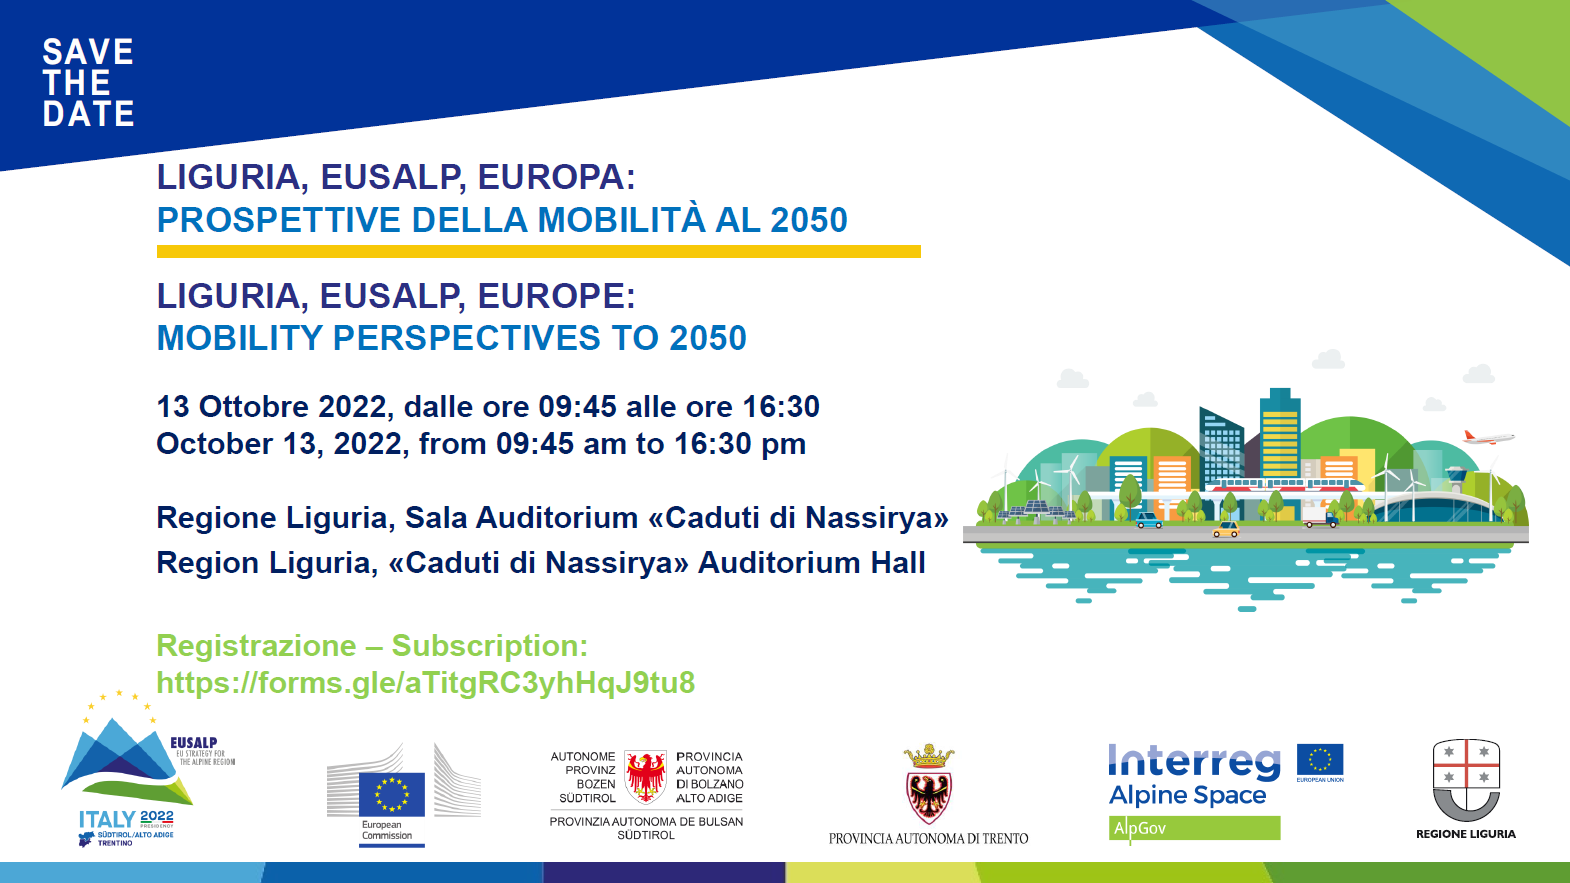 Regione Liguria Eusalp event